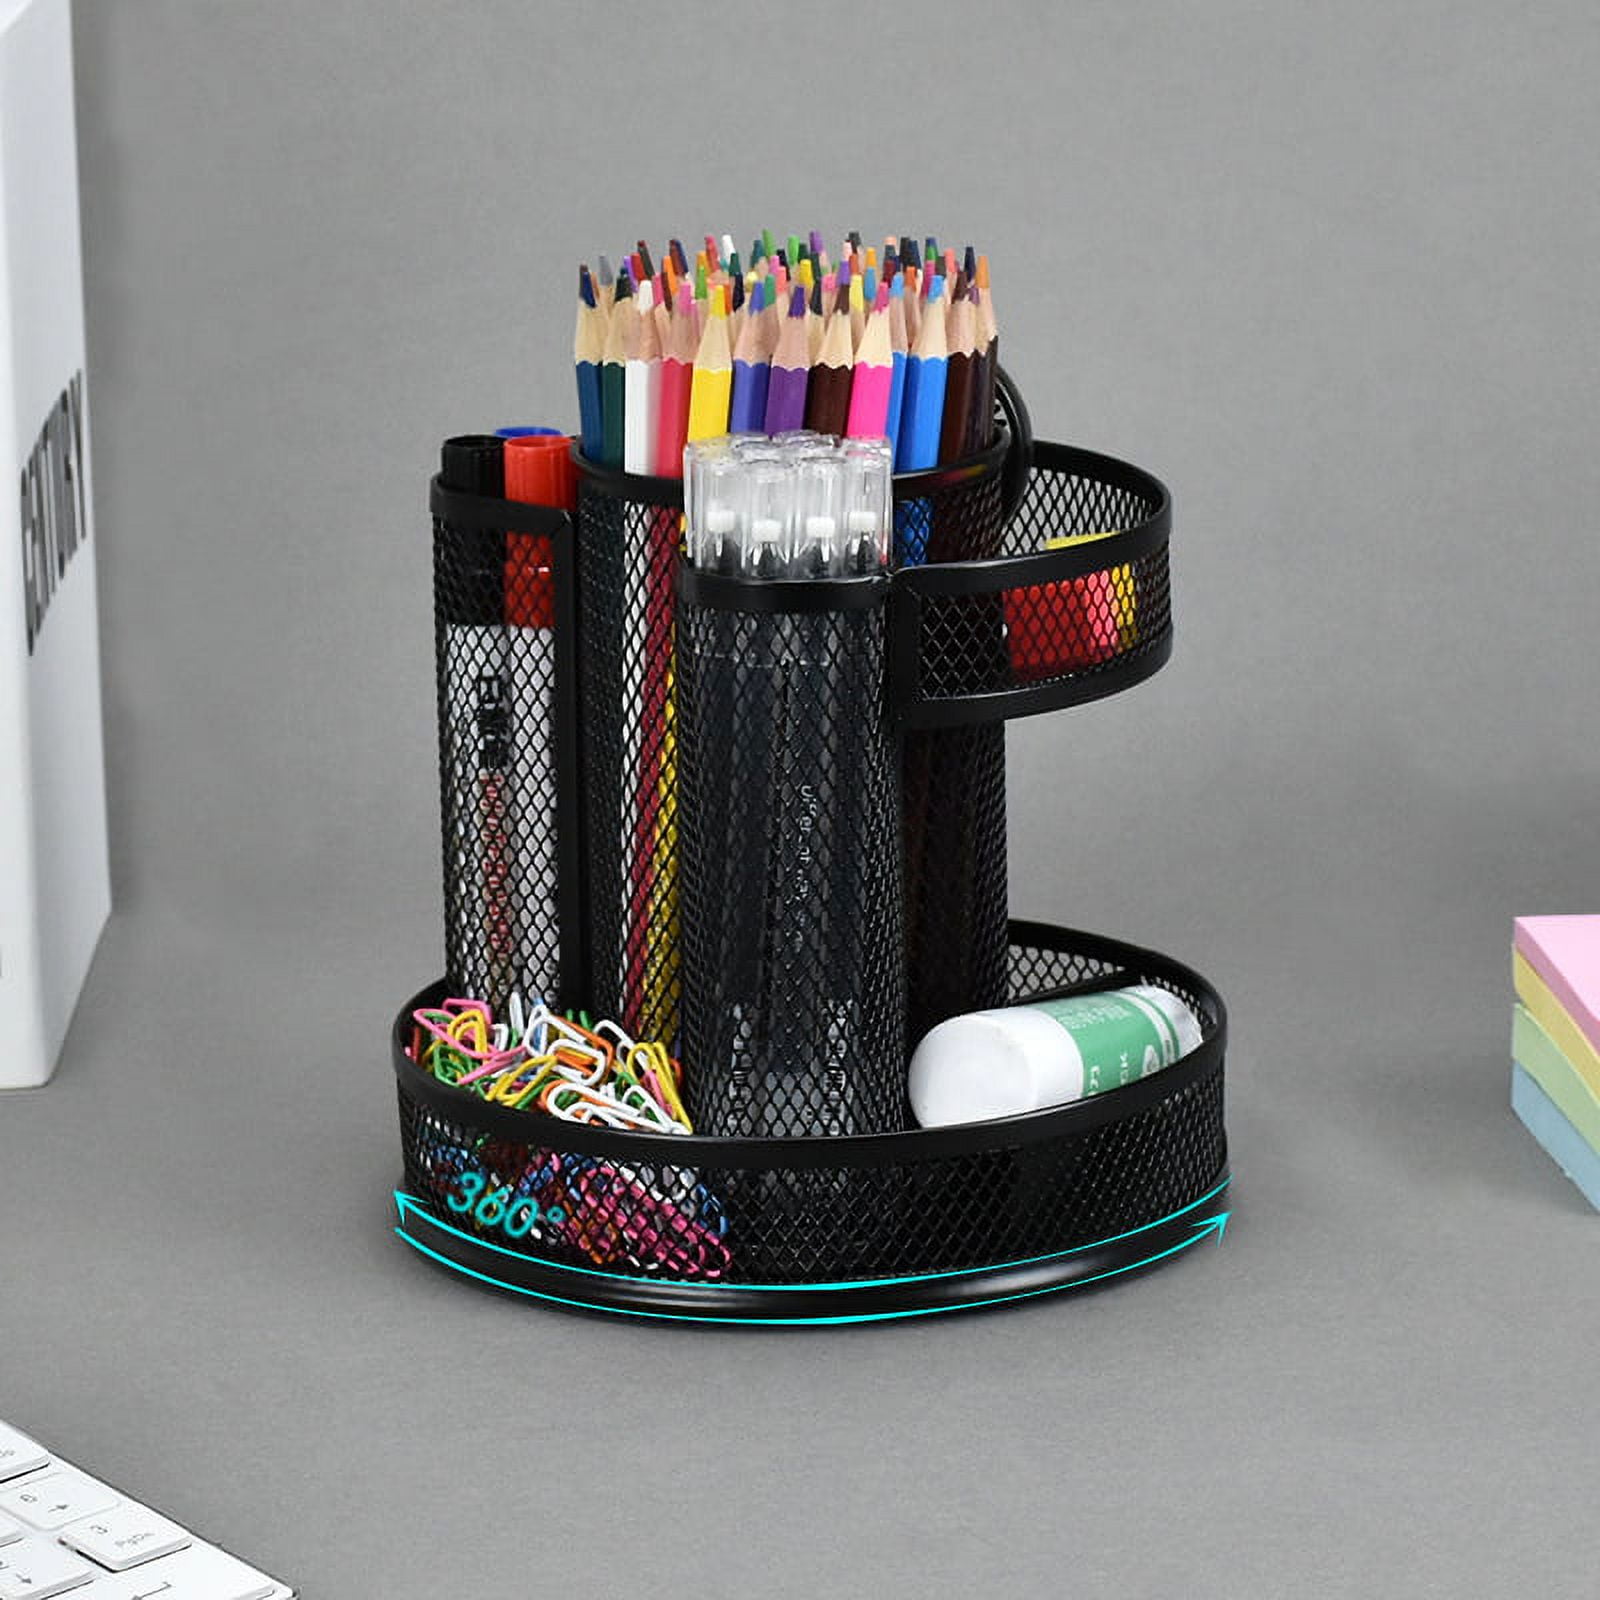 Buy POPRUN Mesh Desk Organizer with 2 Pencil Holders and 2 Sliding